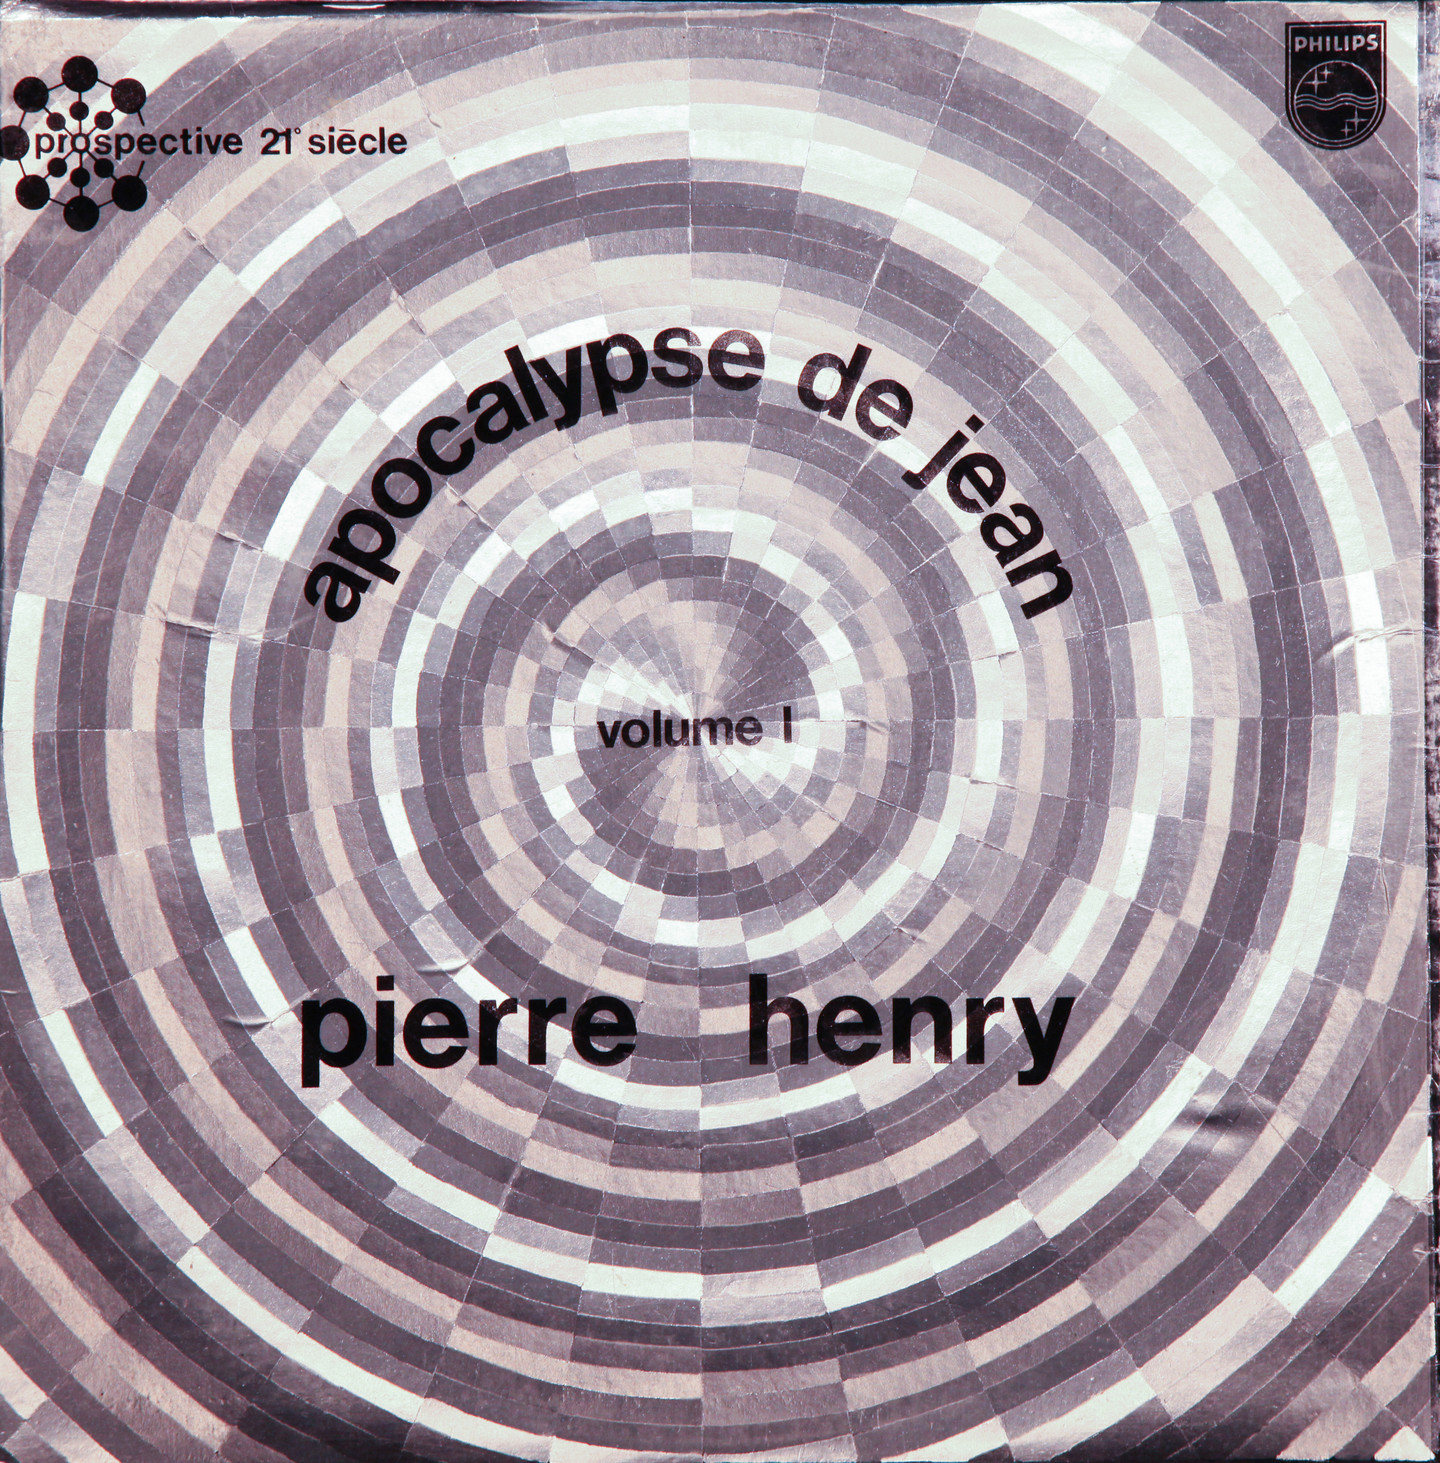 Apocalypse de Jean — Volume I — Pierre Henry — Philips — electrocd 